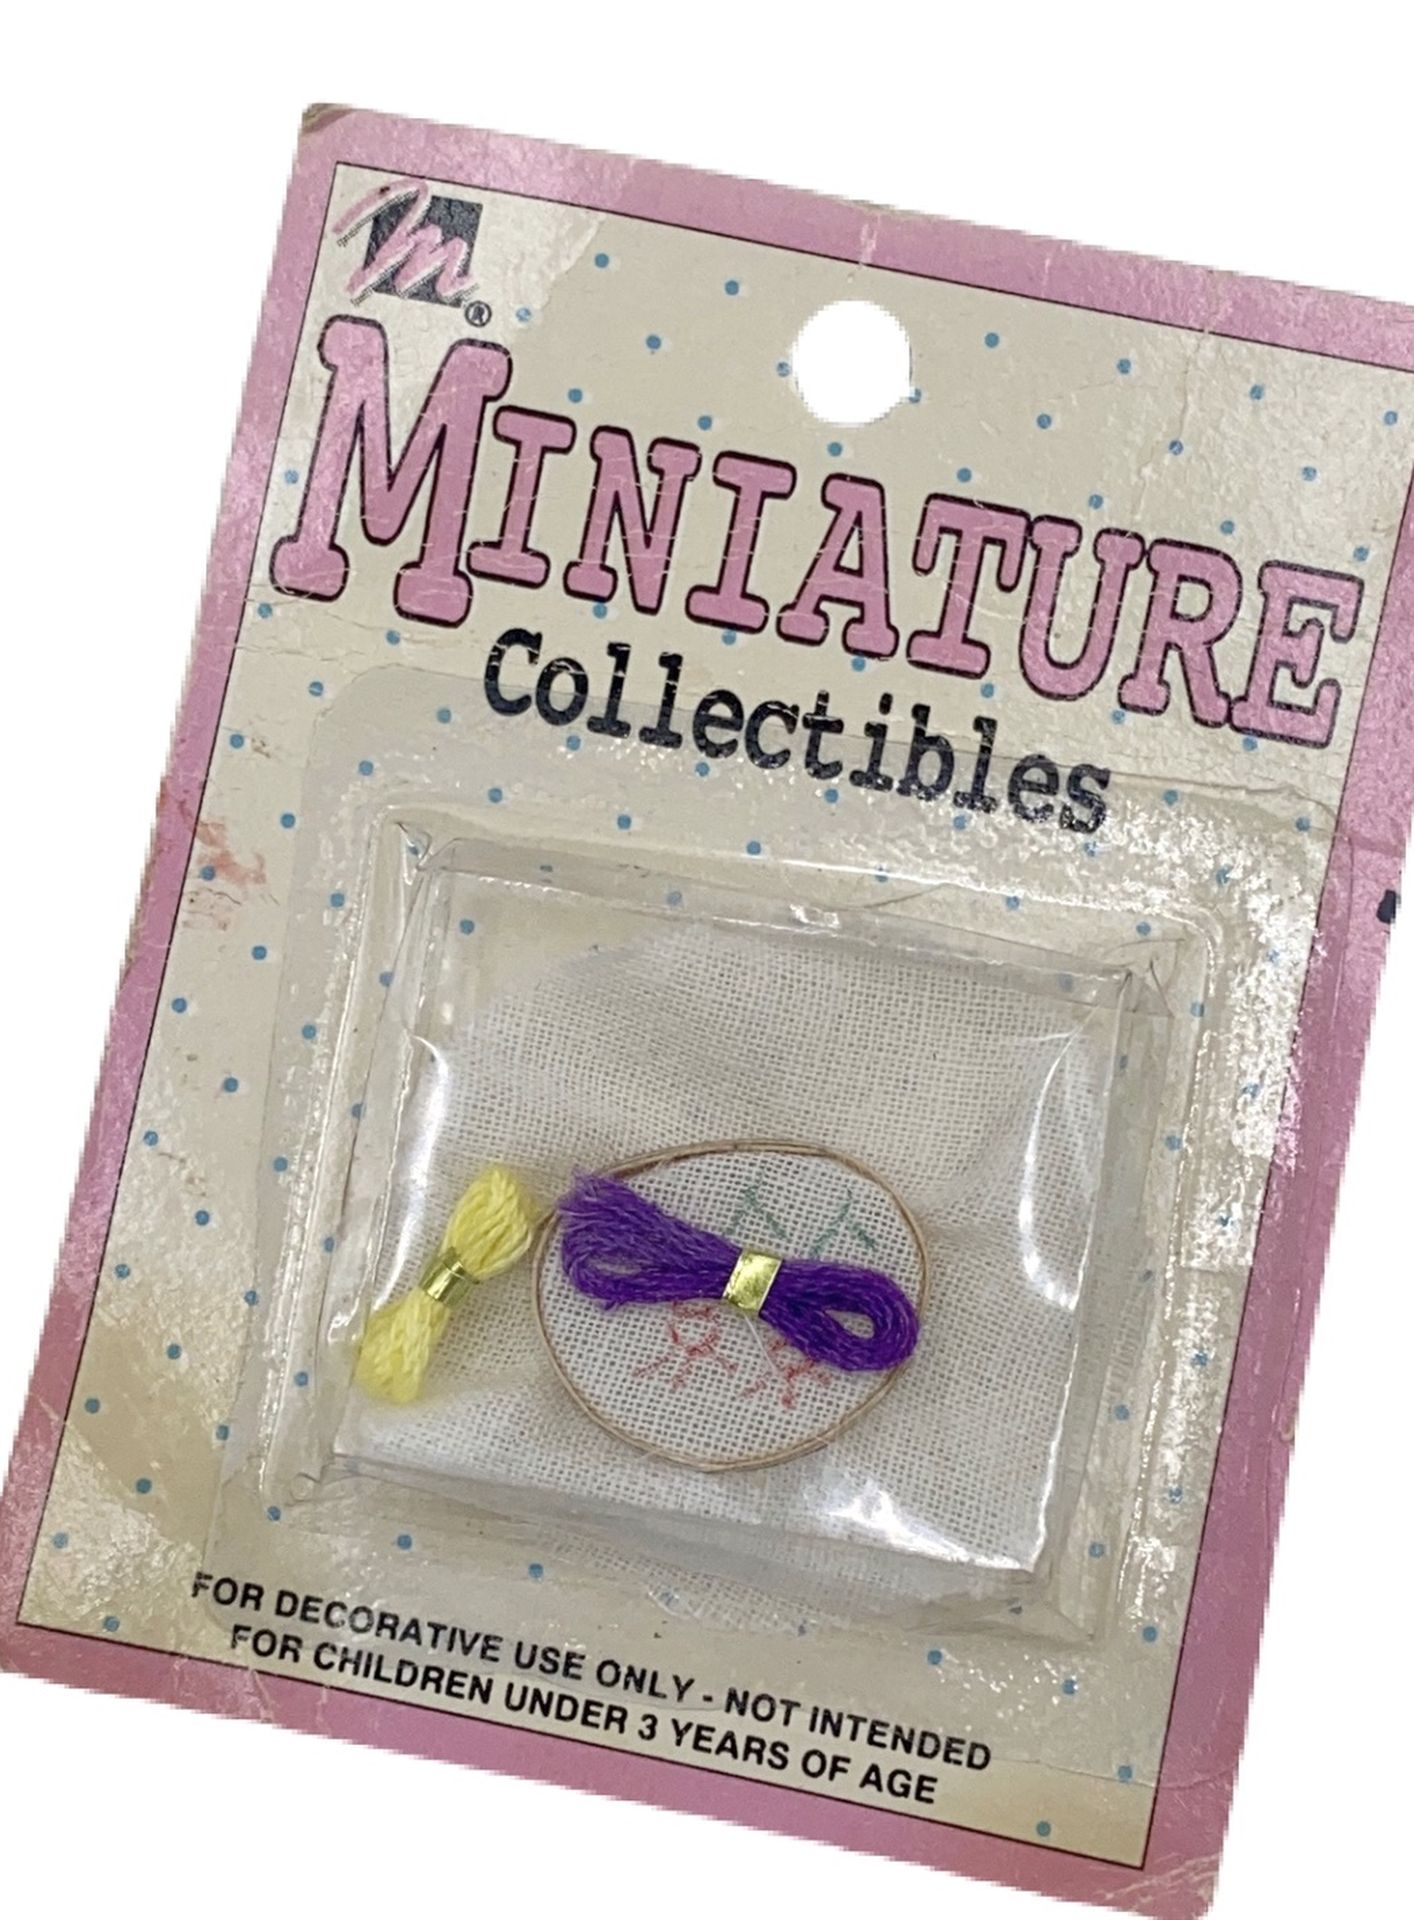 Vintage Toys | Cross Stitch by Mangelsen’s Miniature Collectibles